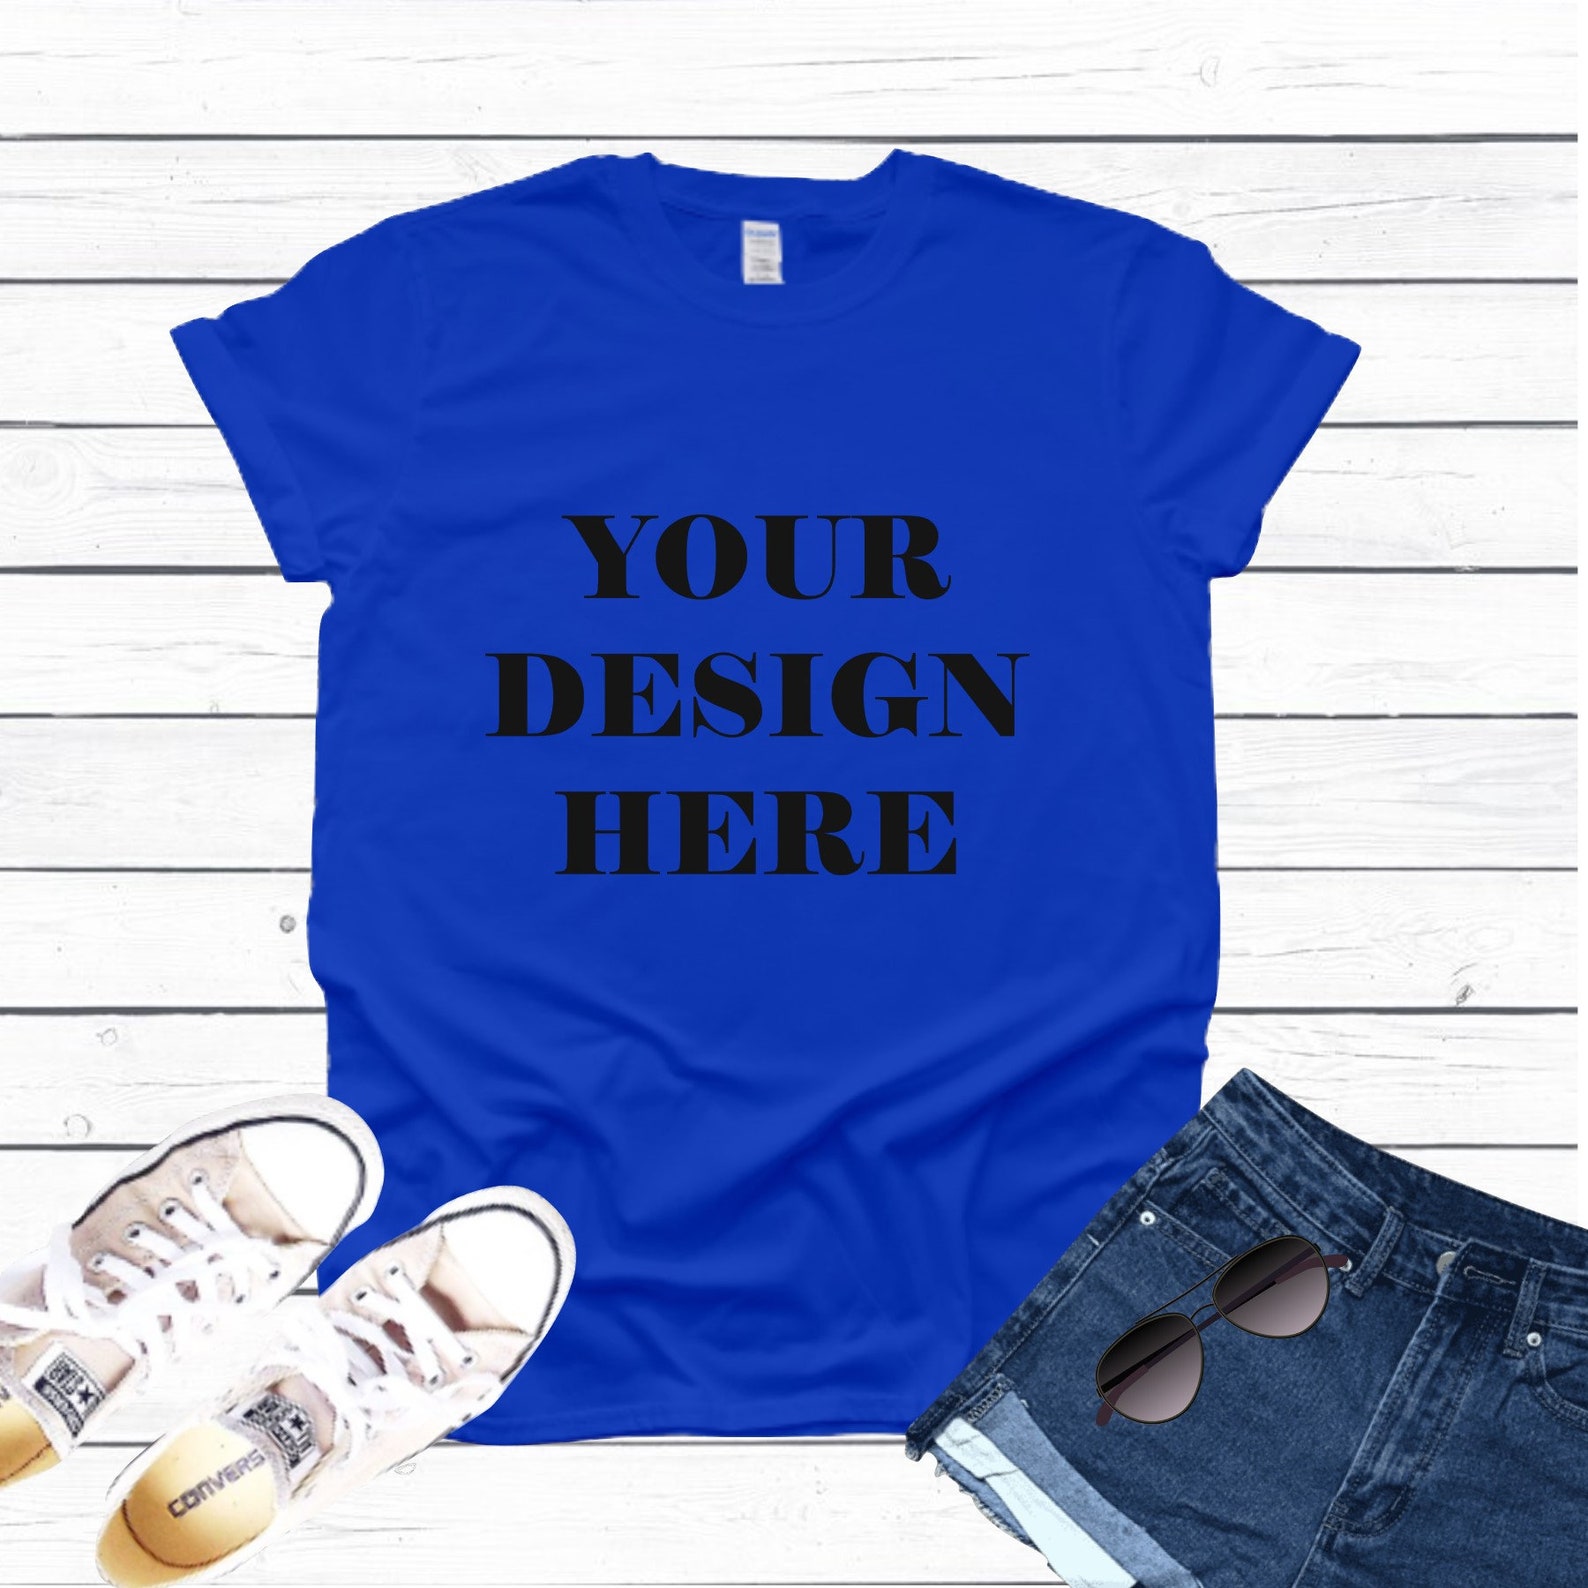 Gildan Neon Blue T Shirt Mockup White Wood Background Shoes | Etsy